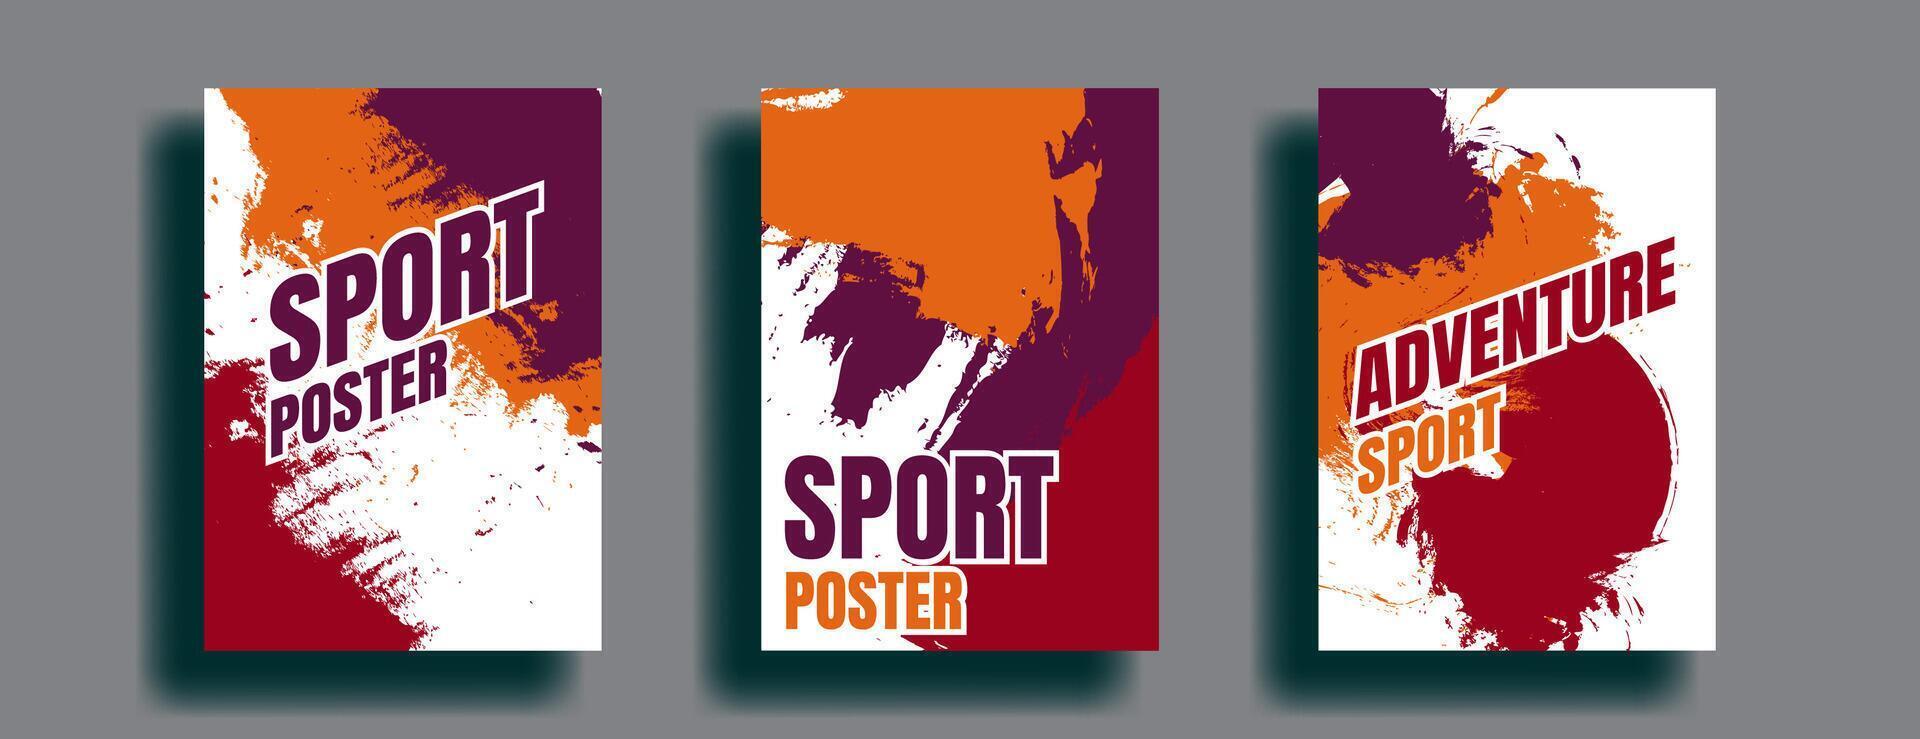 Sport poster design set with grunge background in red, orange and purple color. vector illustration